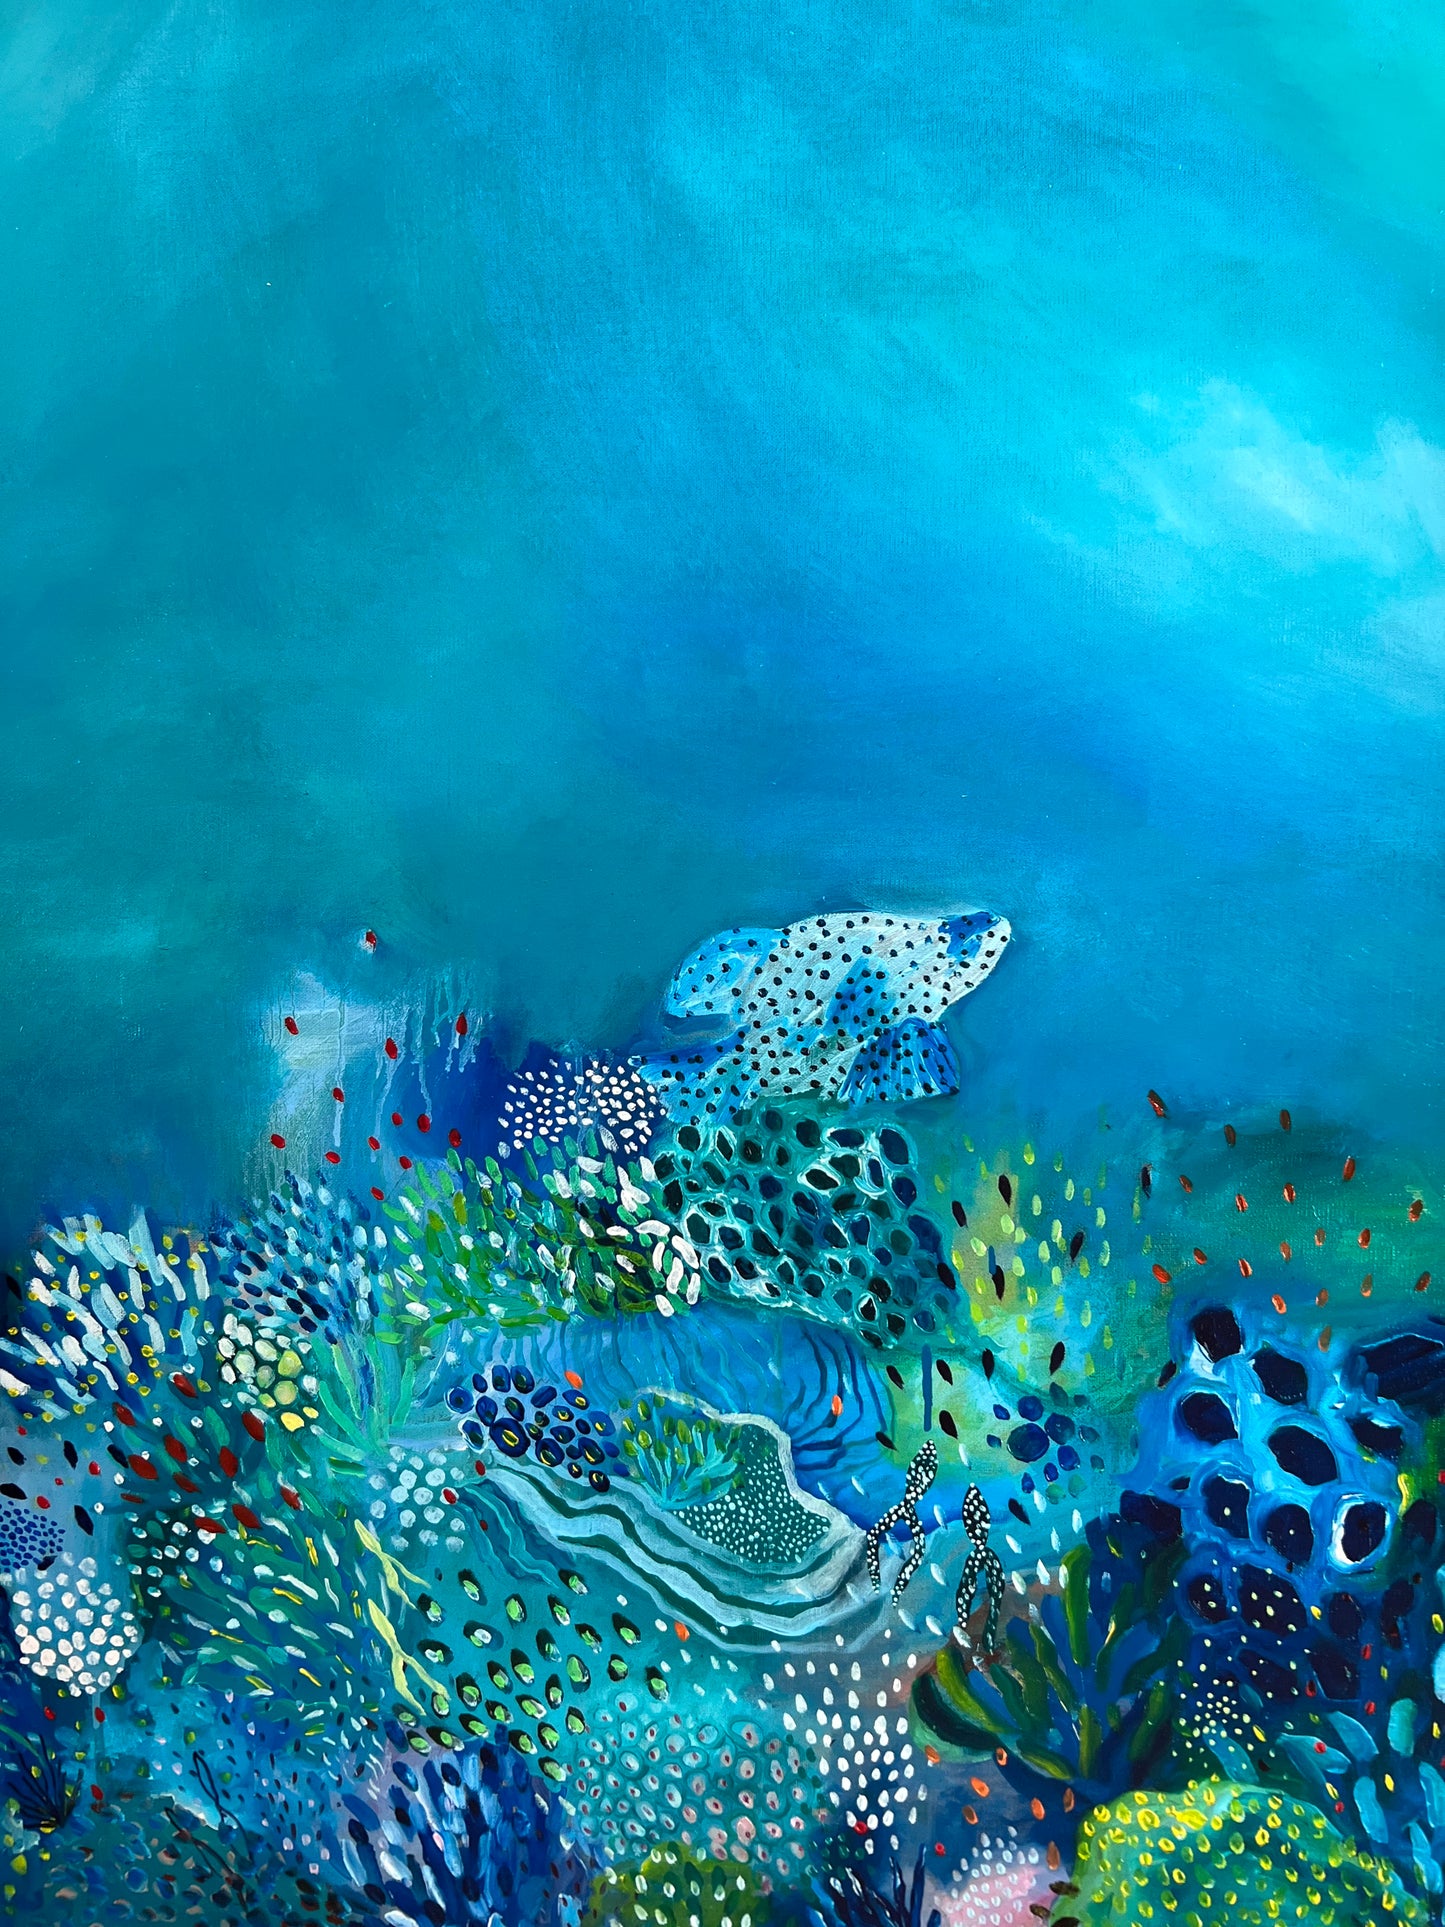 "Spot the fish" art paper print 60x42cm custom size